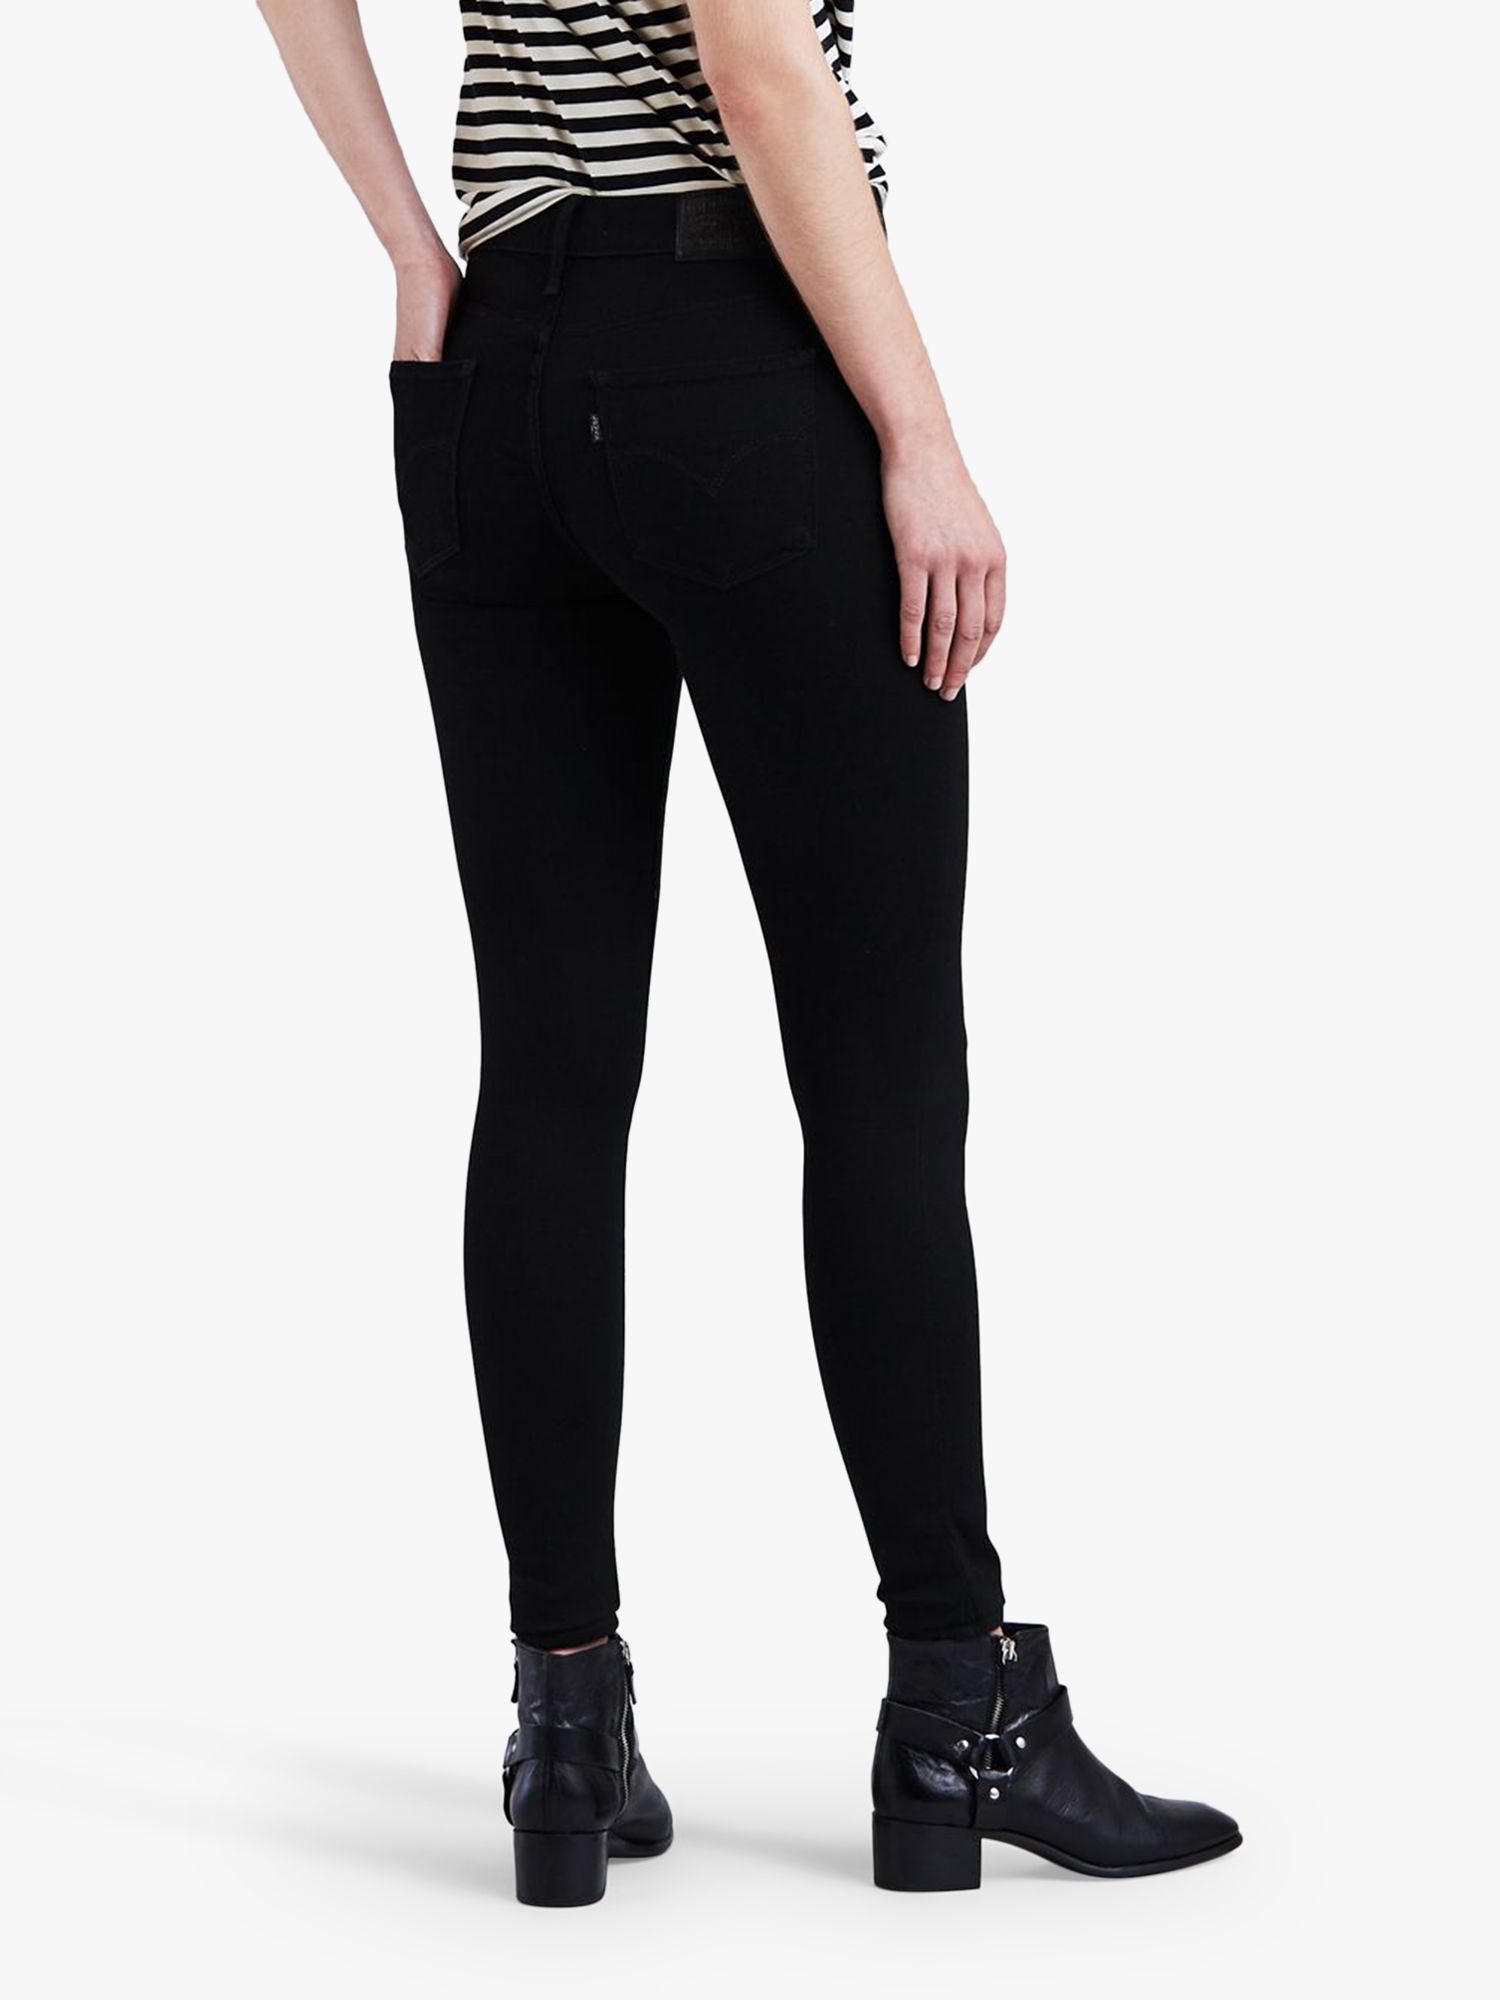 Levi's 720 High Rise Super Skinny Jeans, Black Galaxy, W24/L28